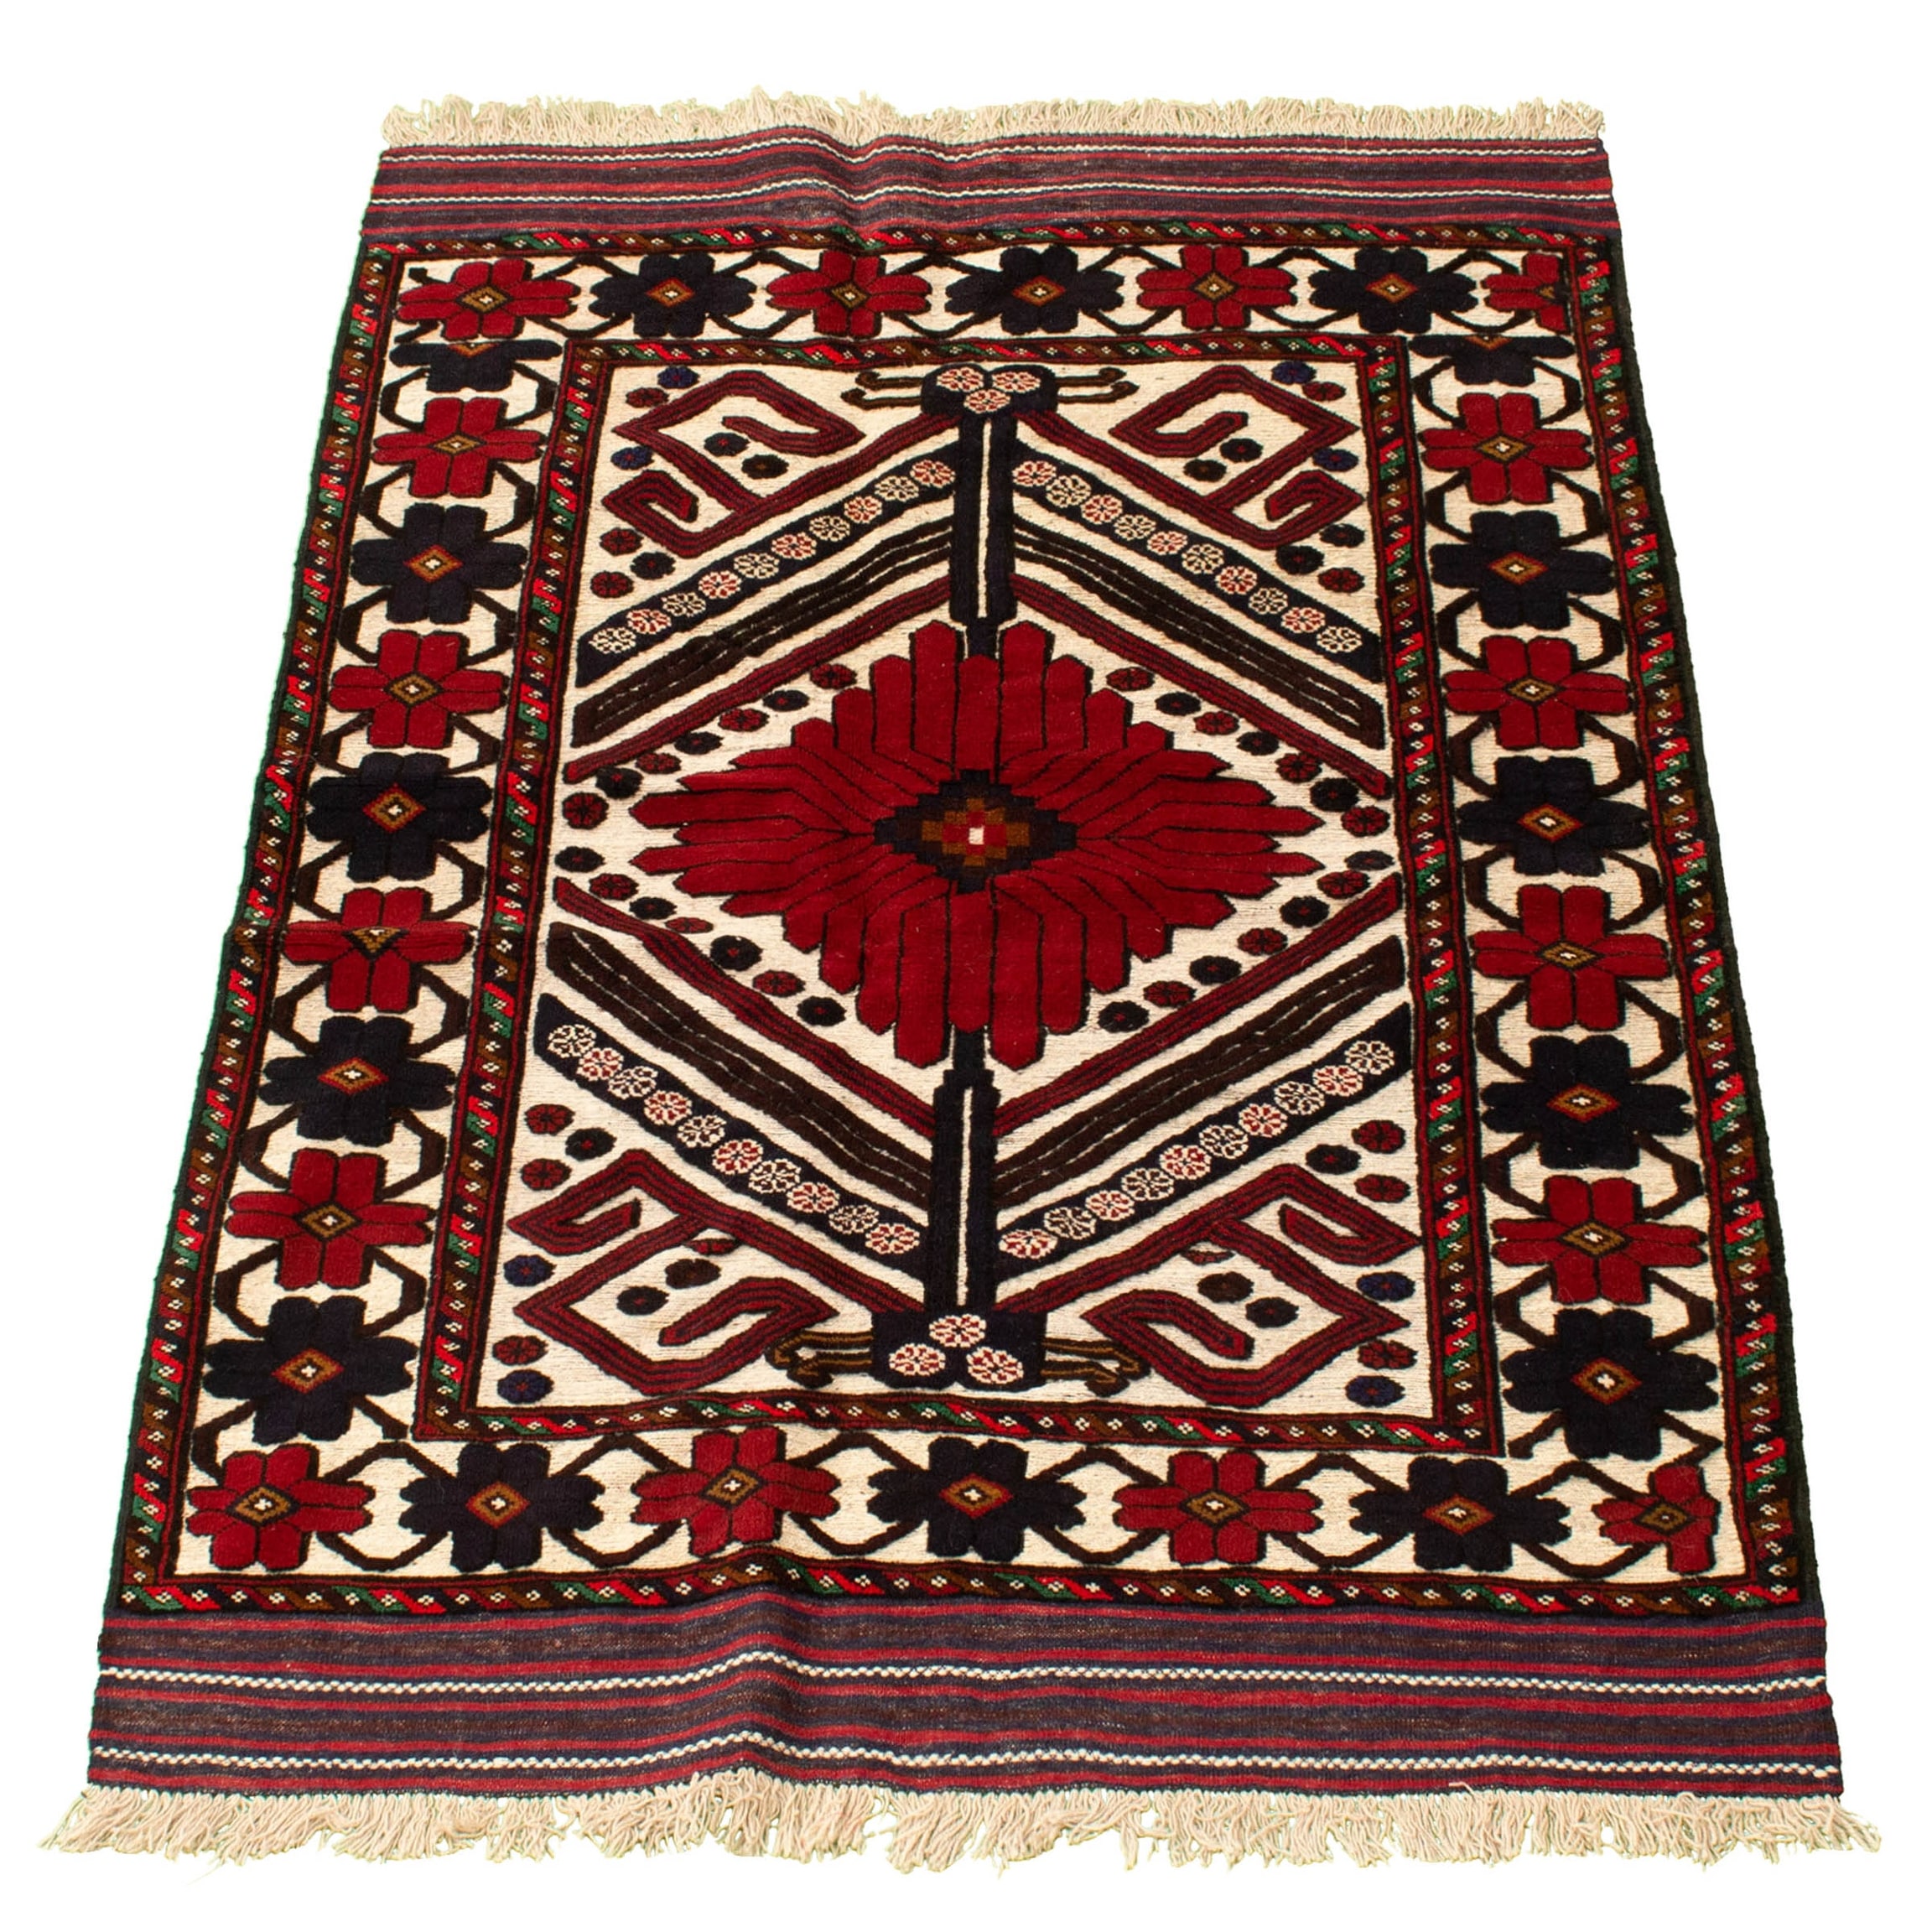 Hand-Knotted Wool Rug Tajik Caucasian Bordered Red Rug 4'0 x 5'11 311593 Bedroom eCarpet Gallery Area Rug for Living Room 